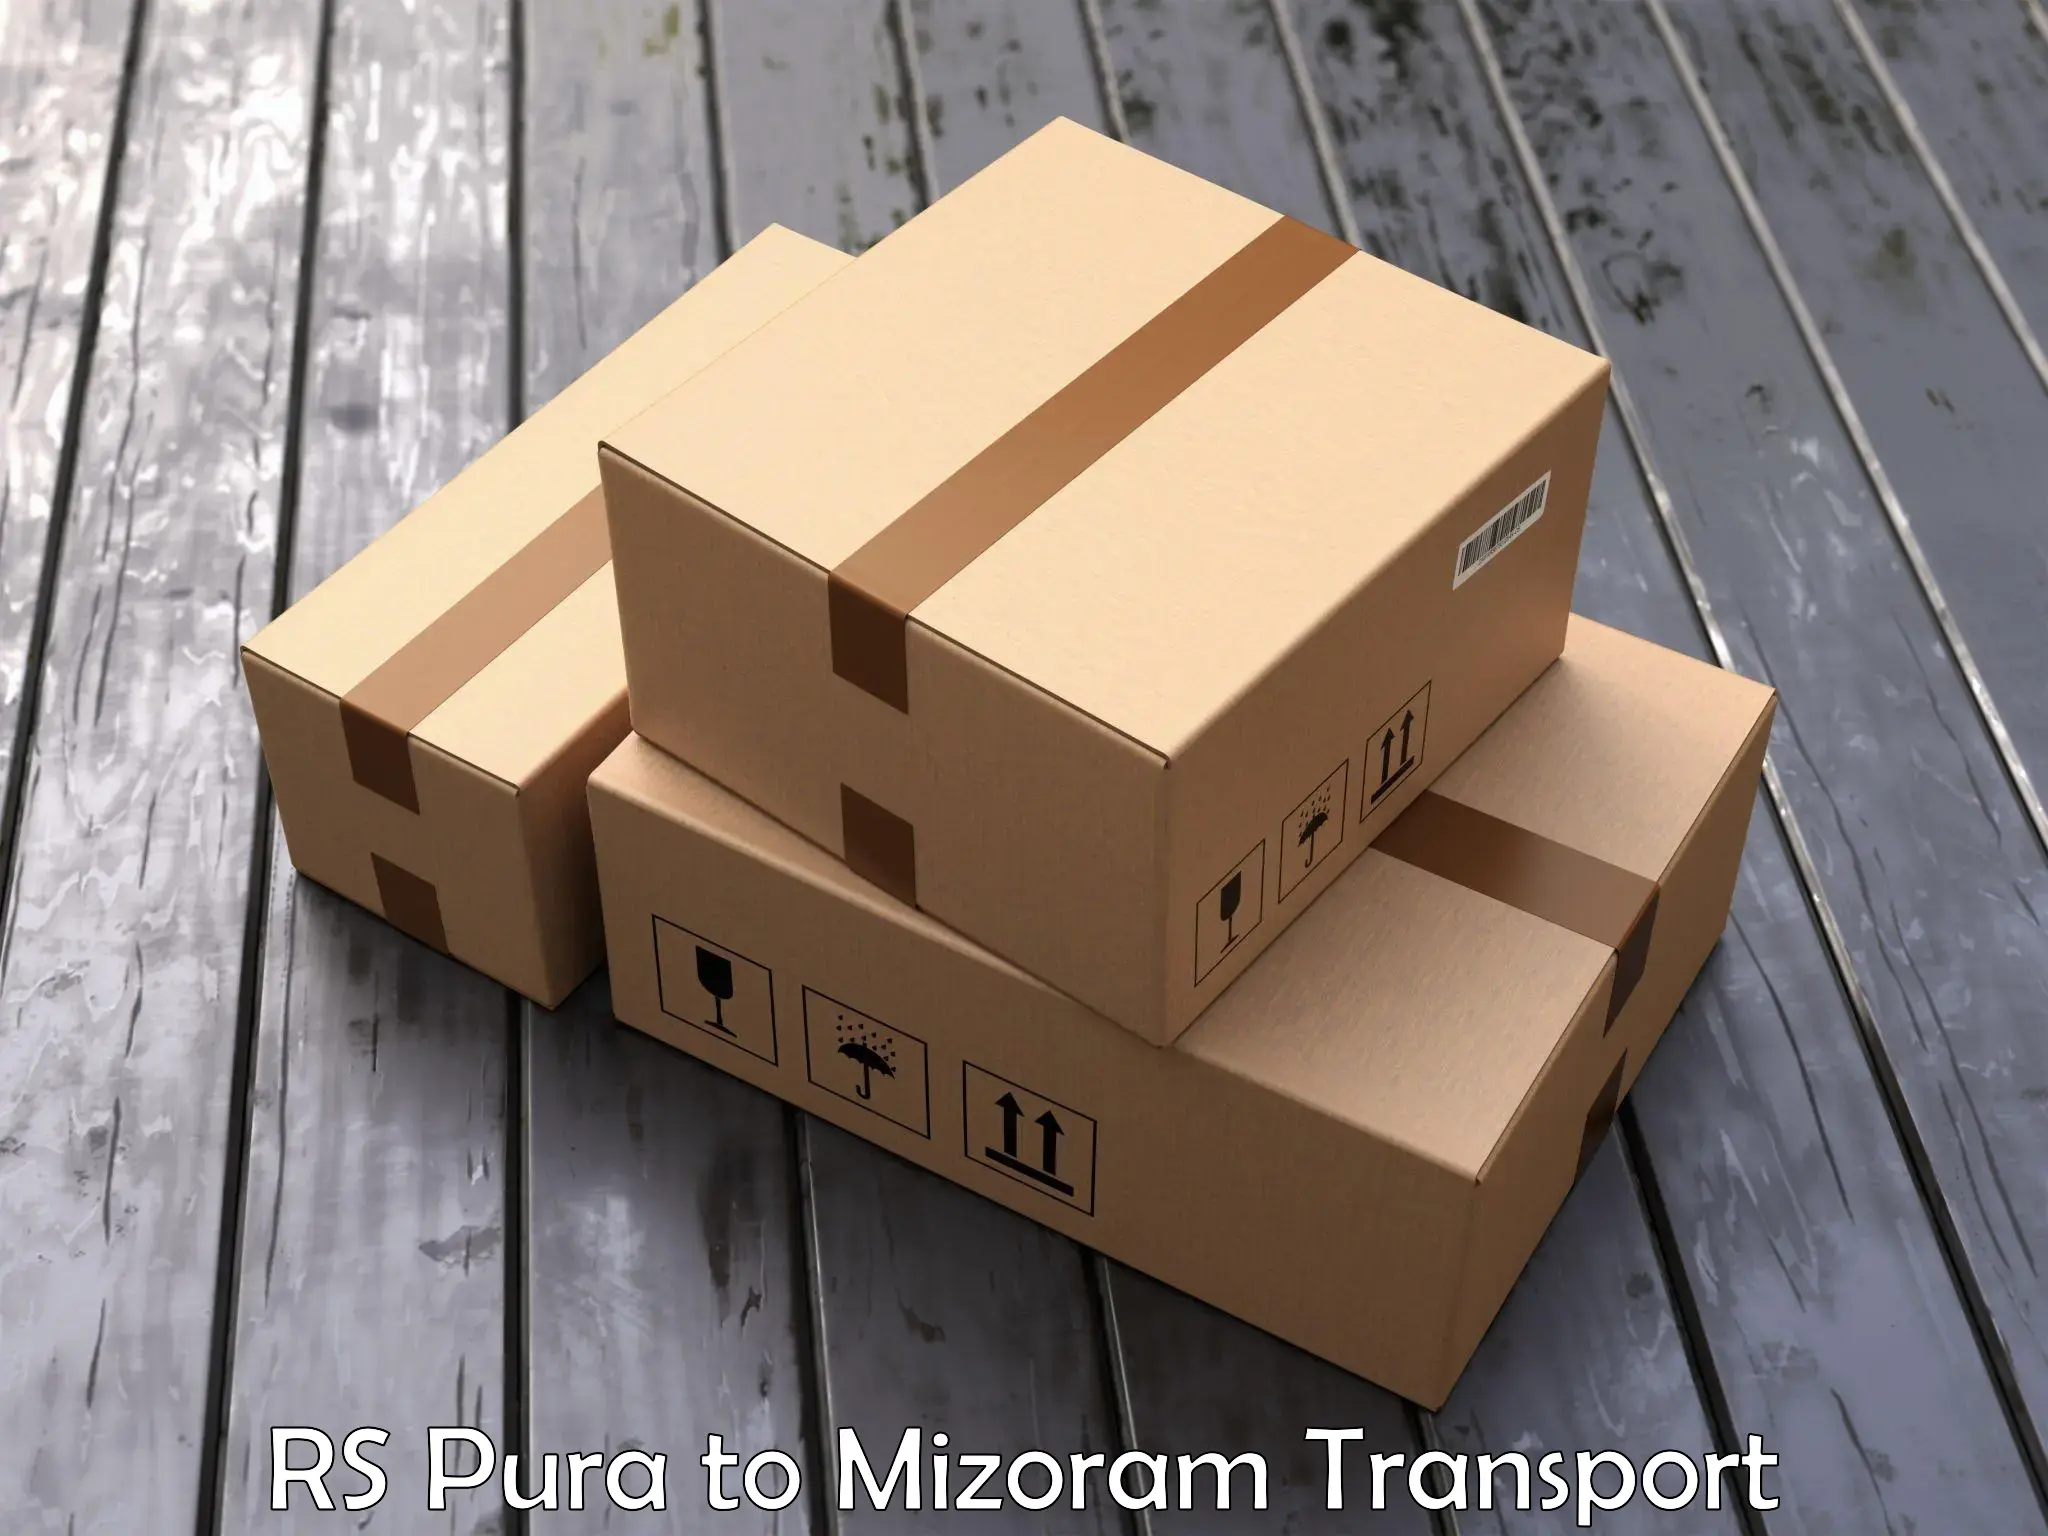 Furniture transport service RS Pura to Mizoram